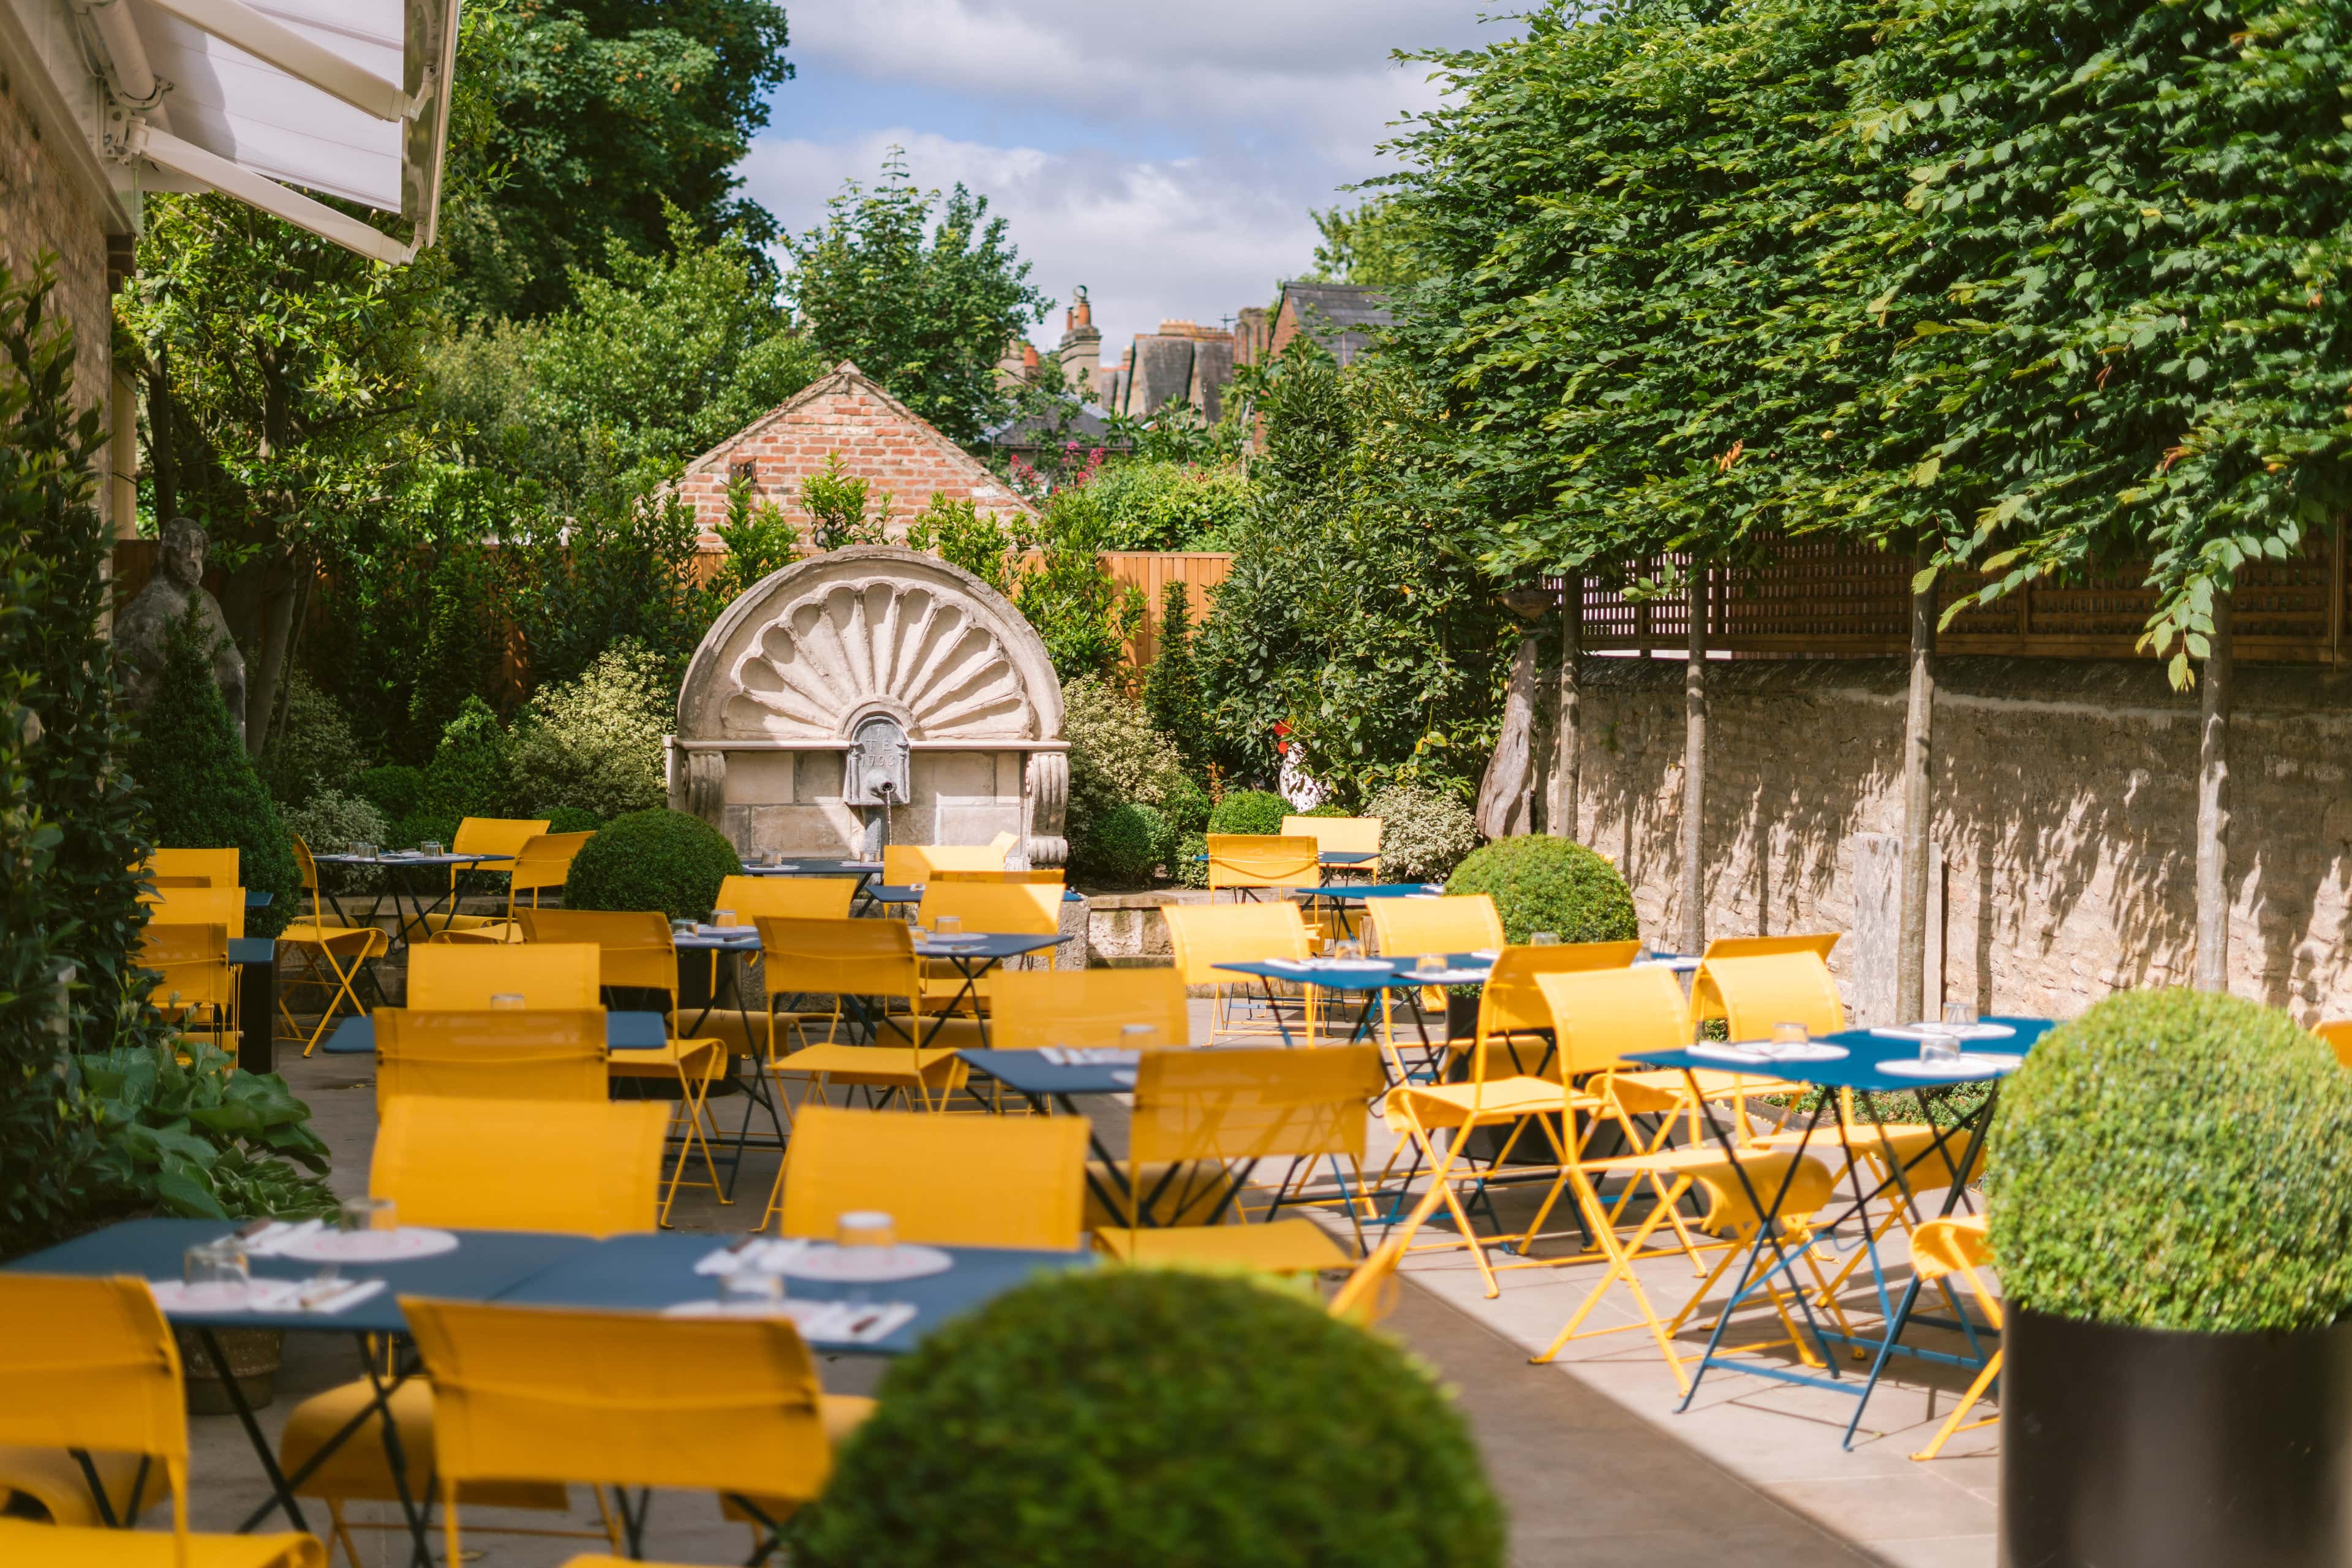 0001 - 2022 - Gees Restaurant & Bar - Oxford - High res - Secret Garden Terrace Sun - Web Hero